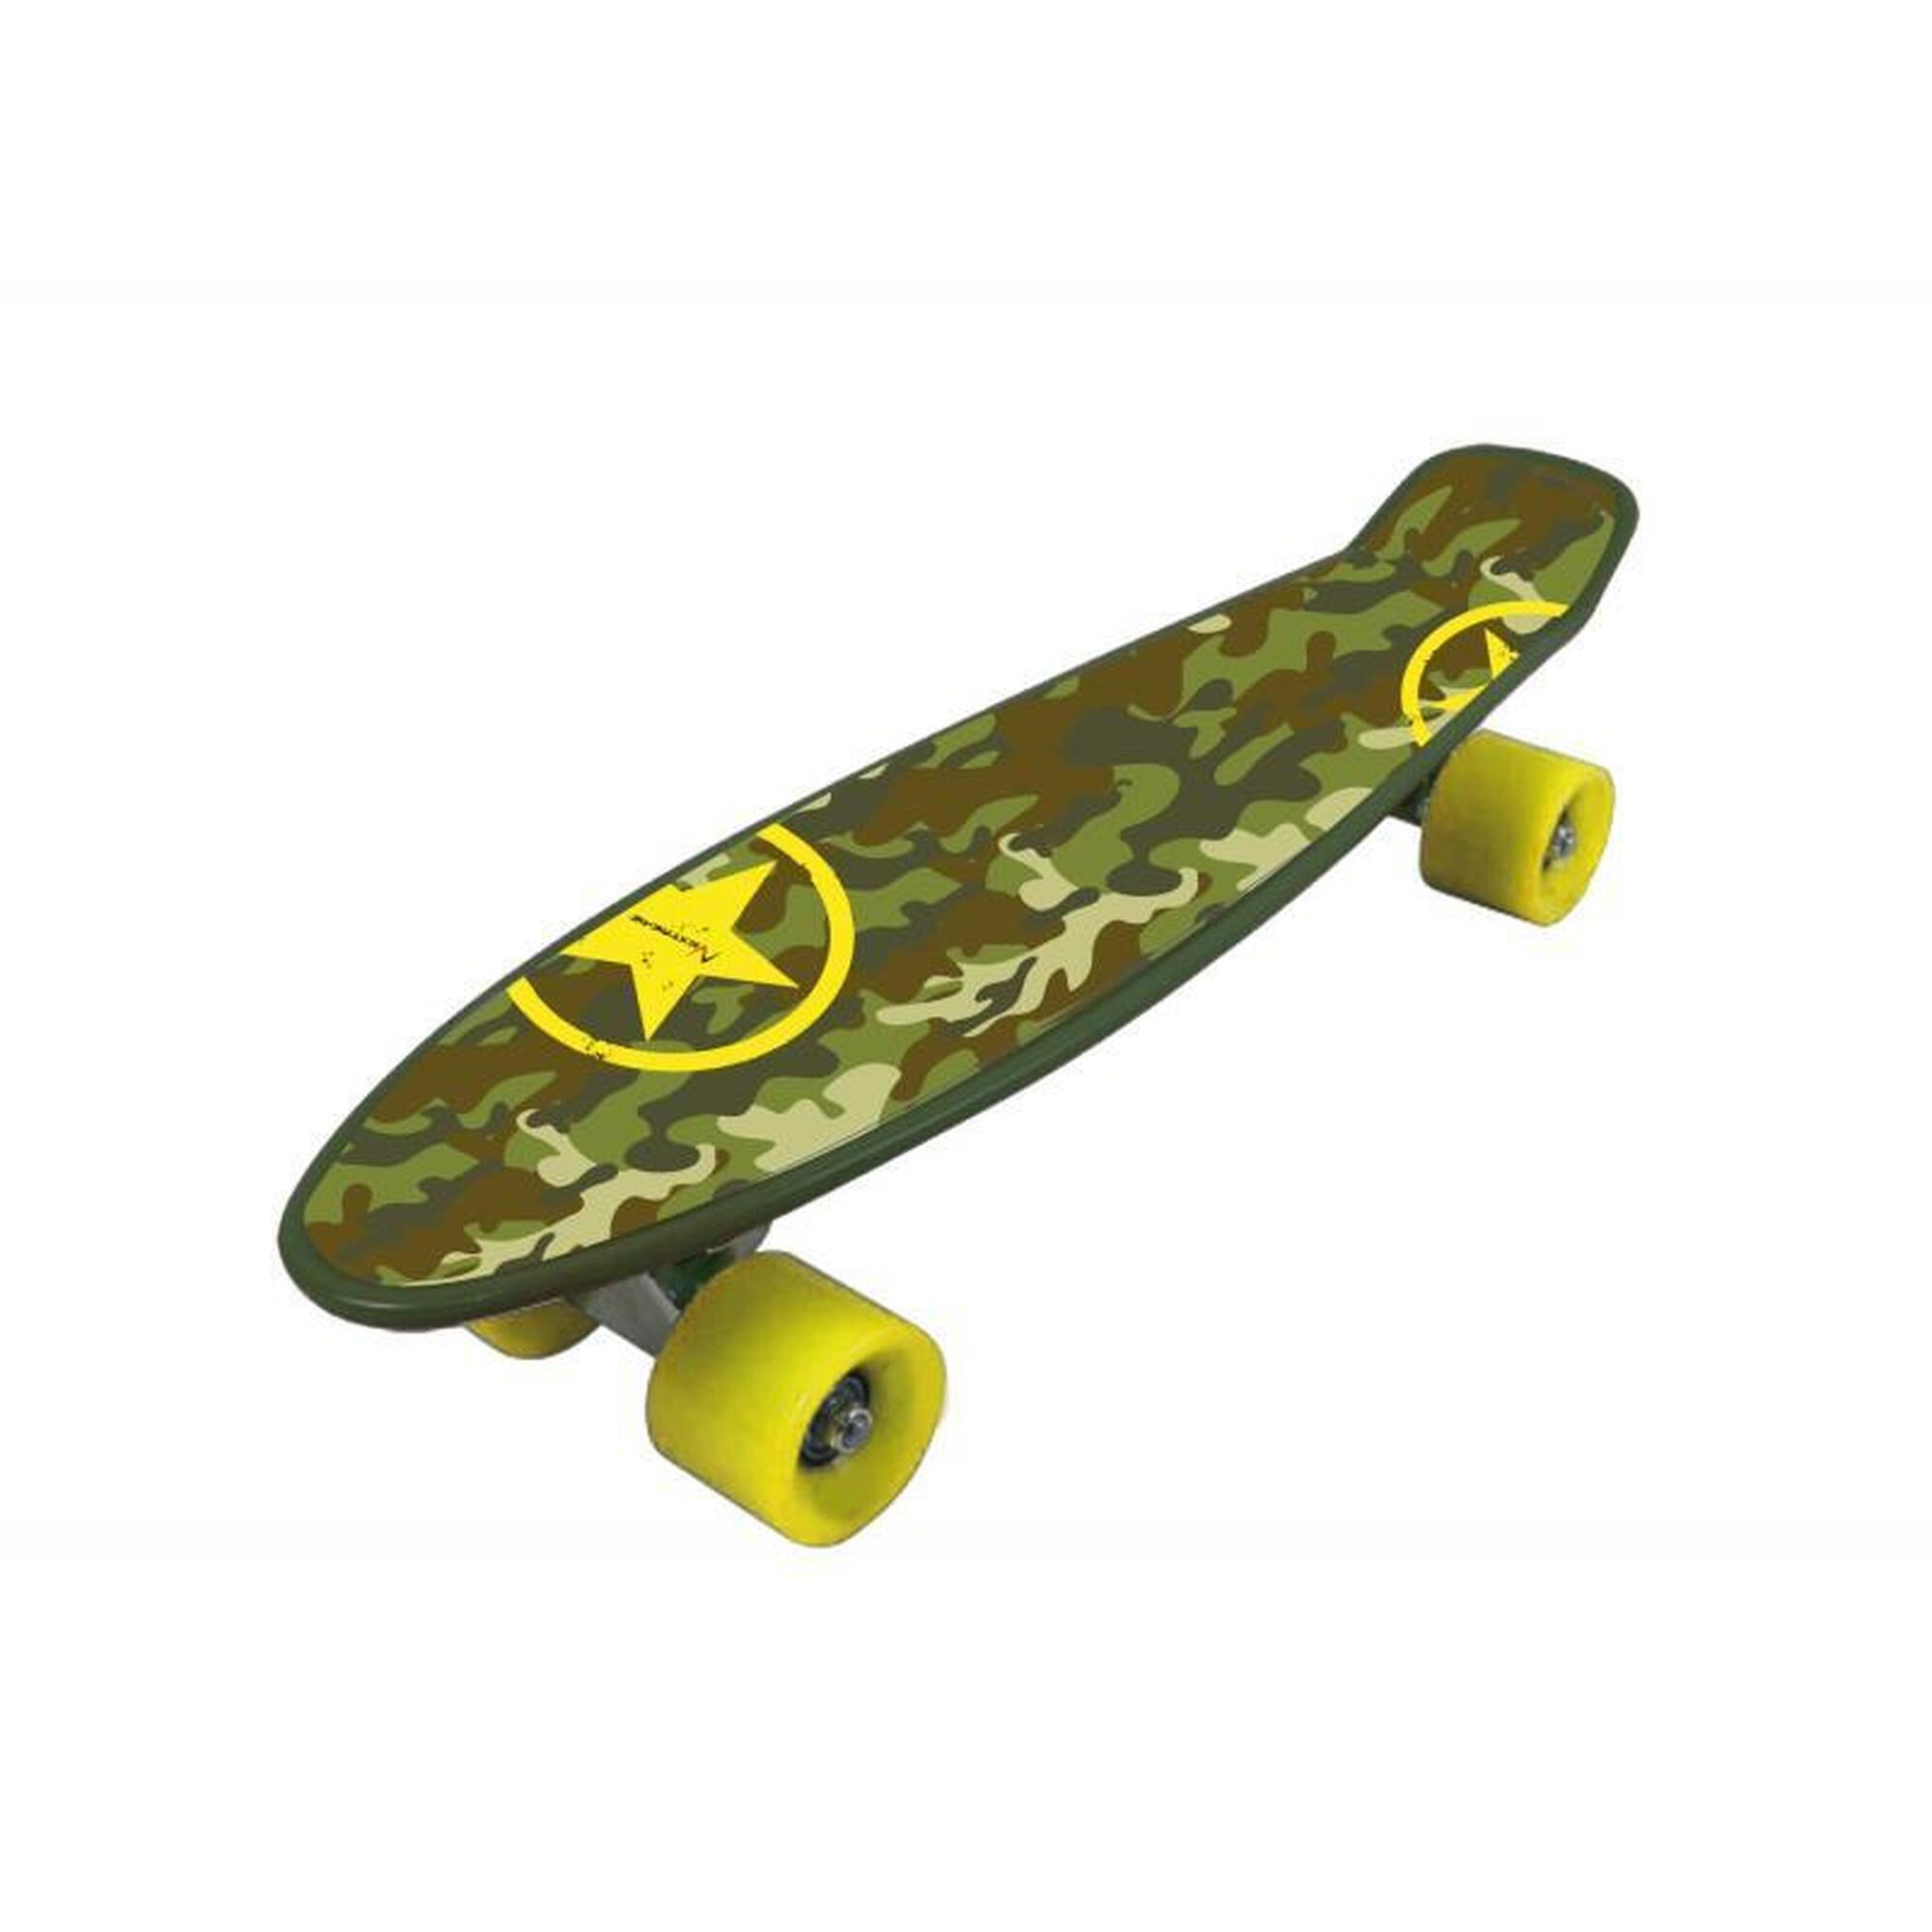 Skateboard Penny Board Nextreme Freedom Pro Military, Multicolor, uni